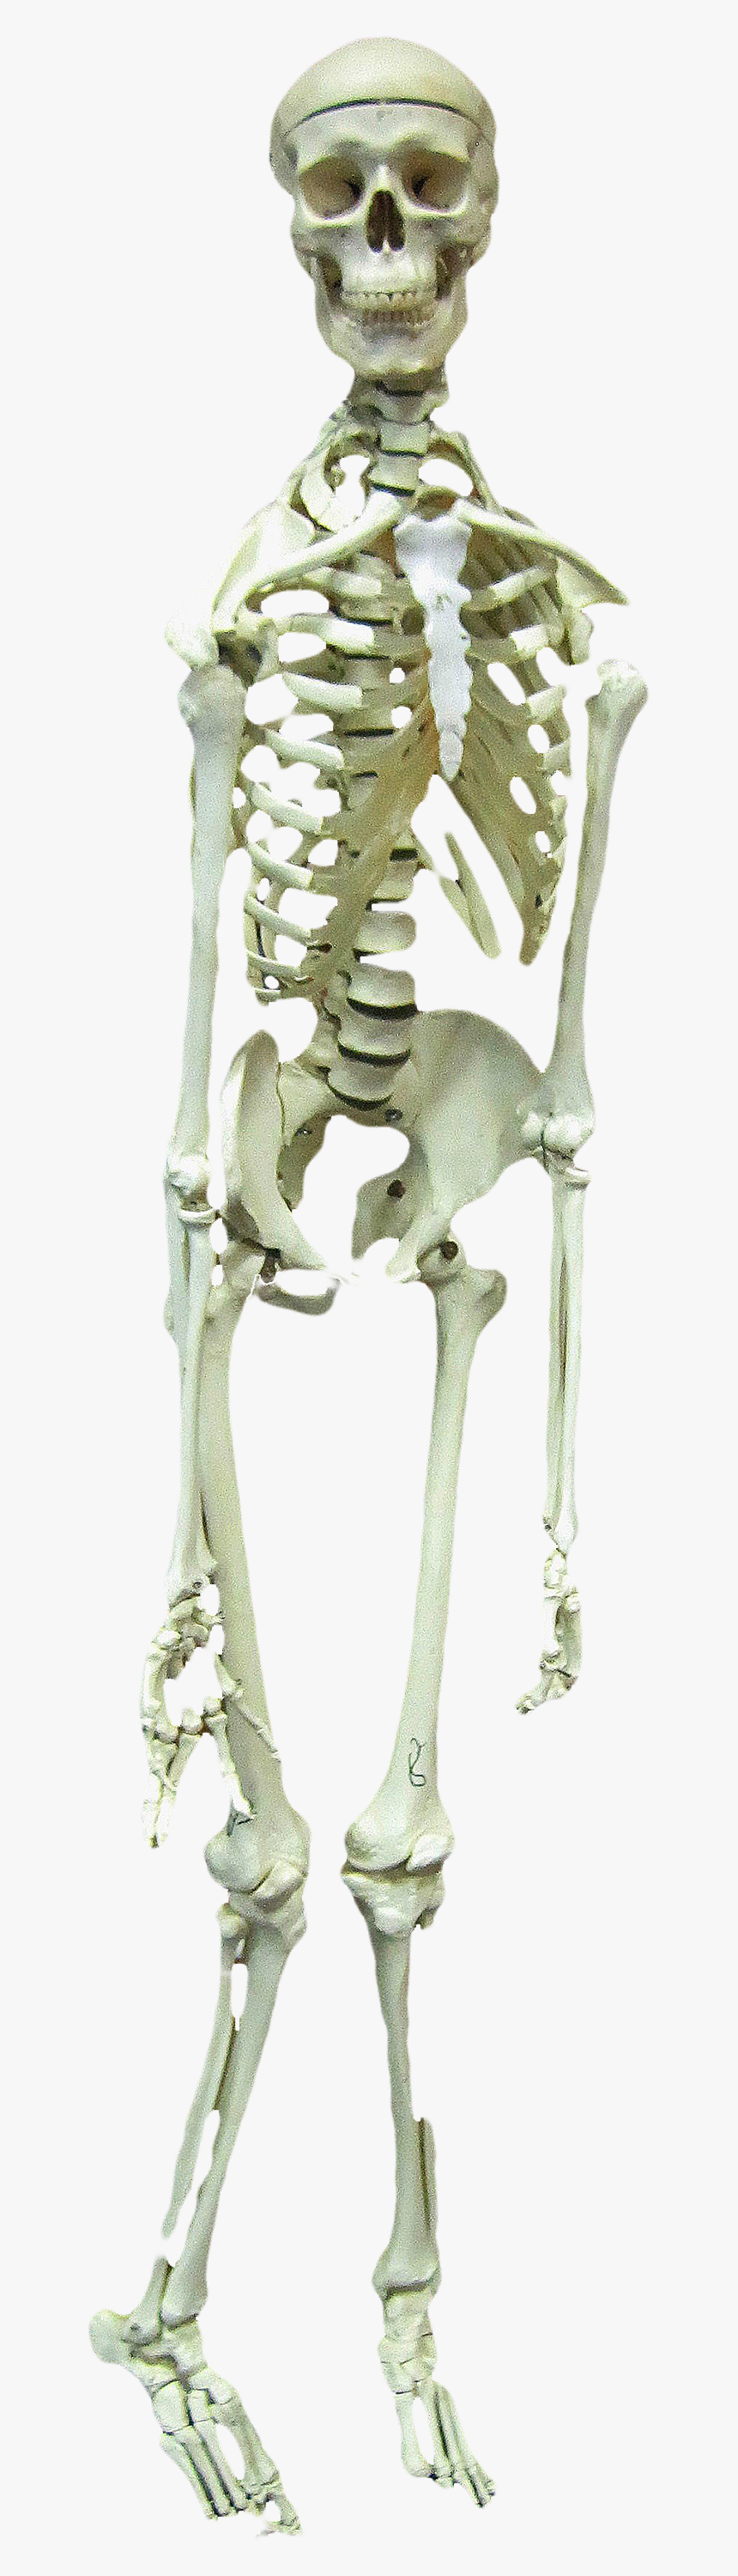 Free Scary Halloween Skeleton Png Image - Skeleton, Transparent Png, Free Download